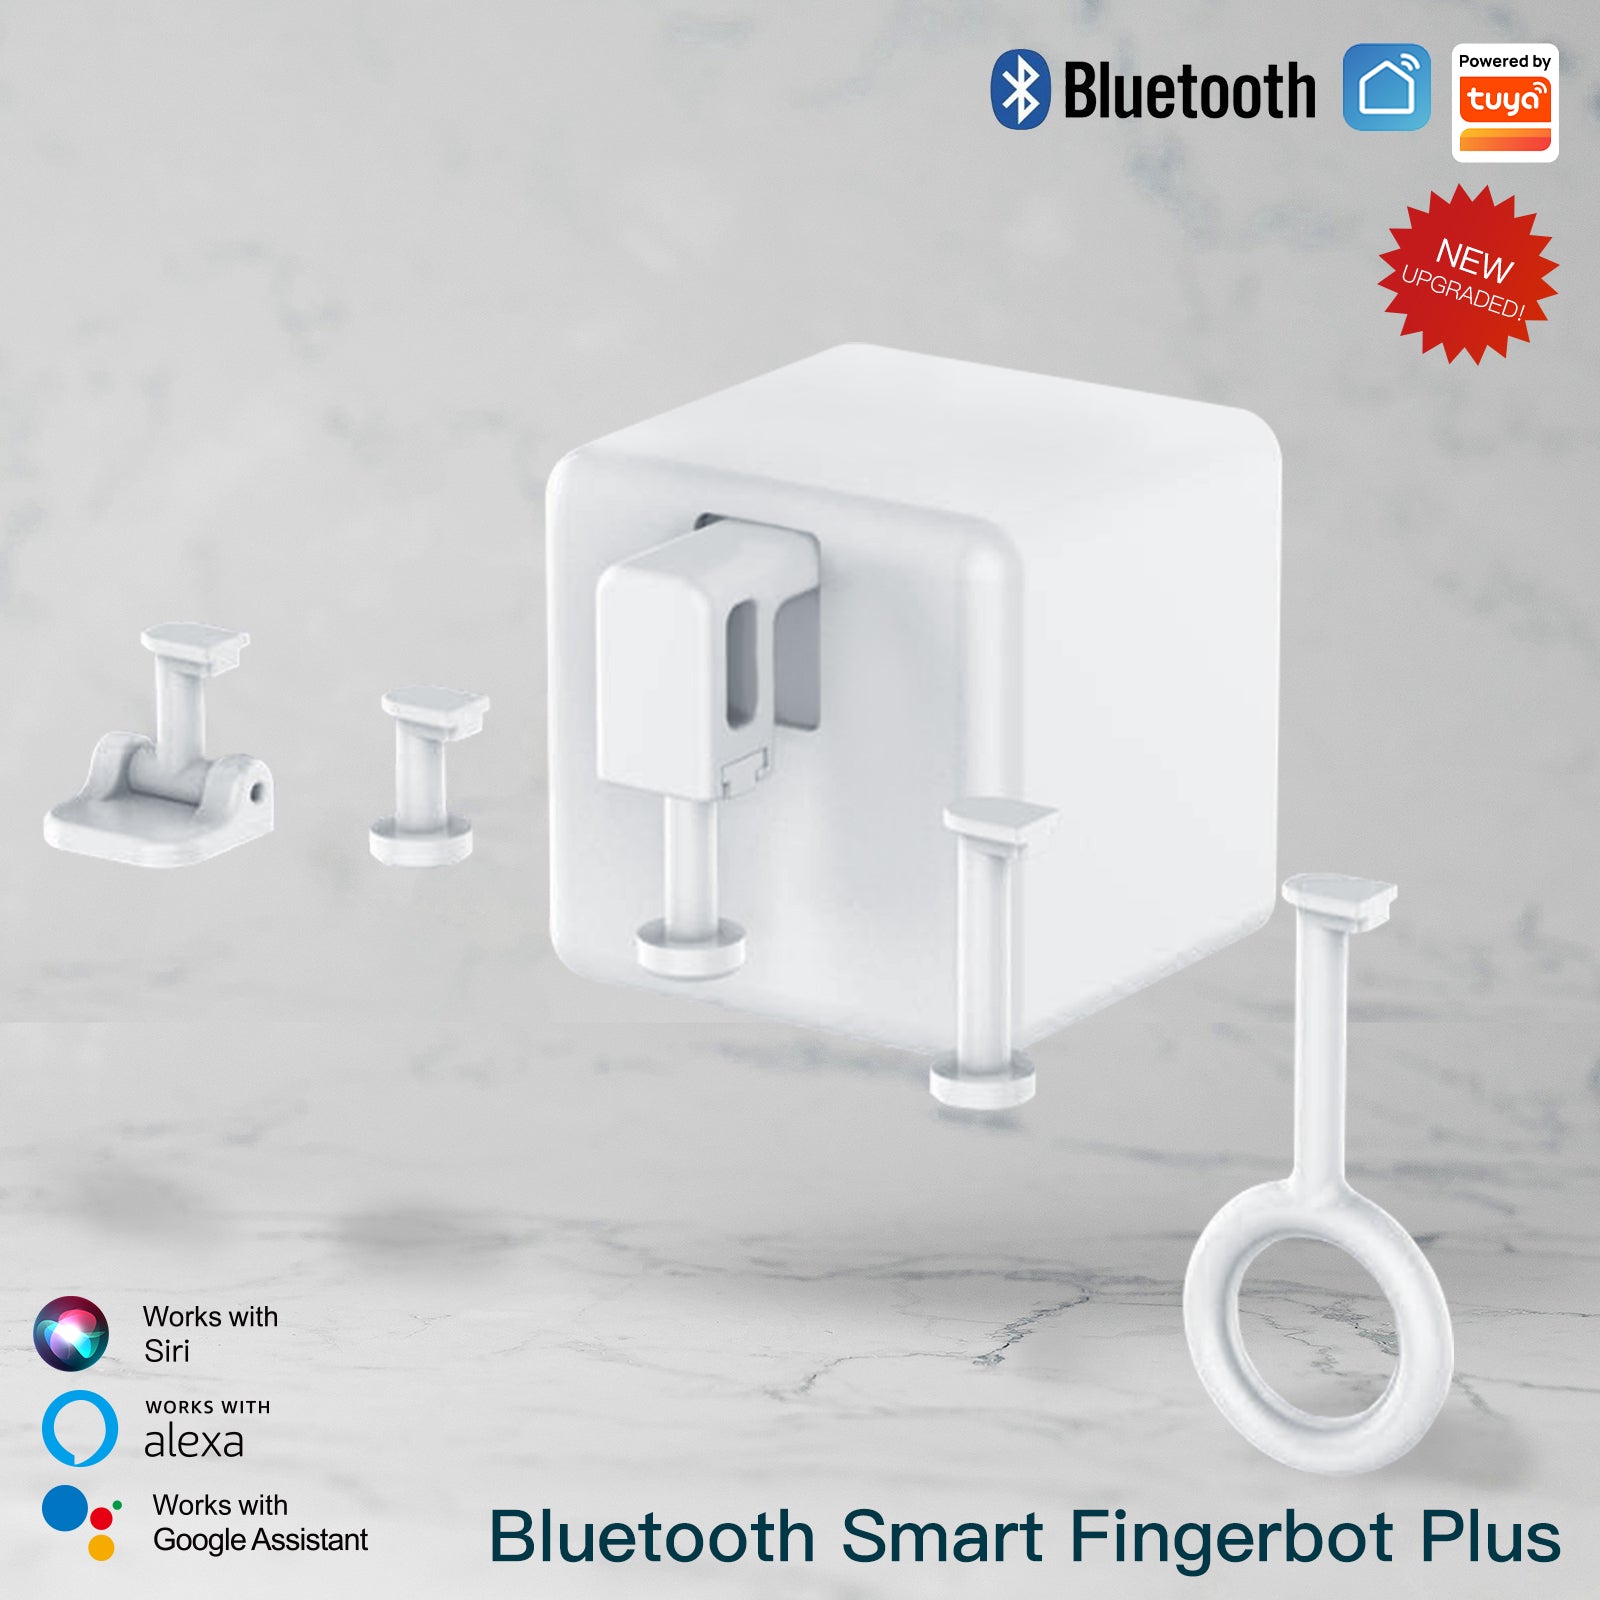 Bluetooth Smart Fingerbot Plus work with siri